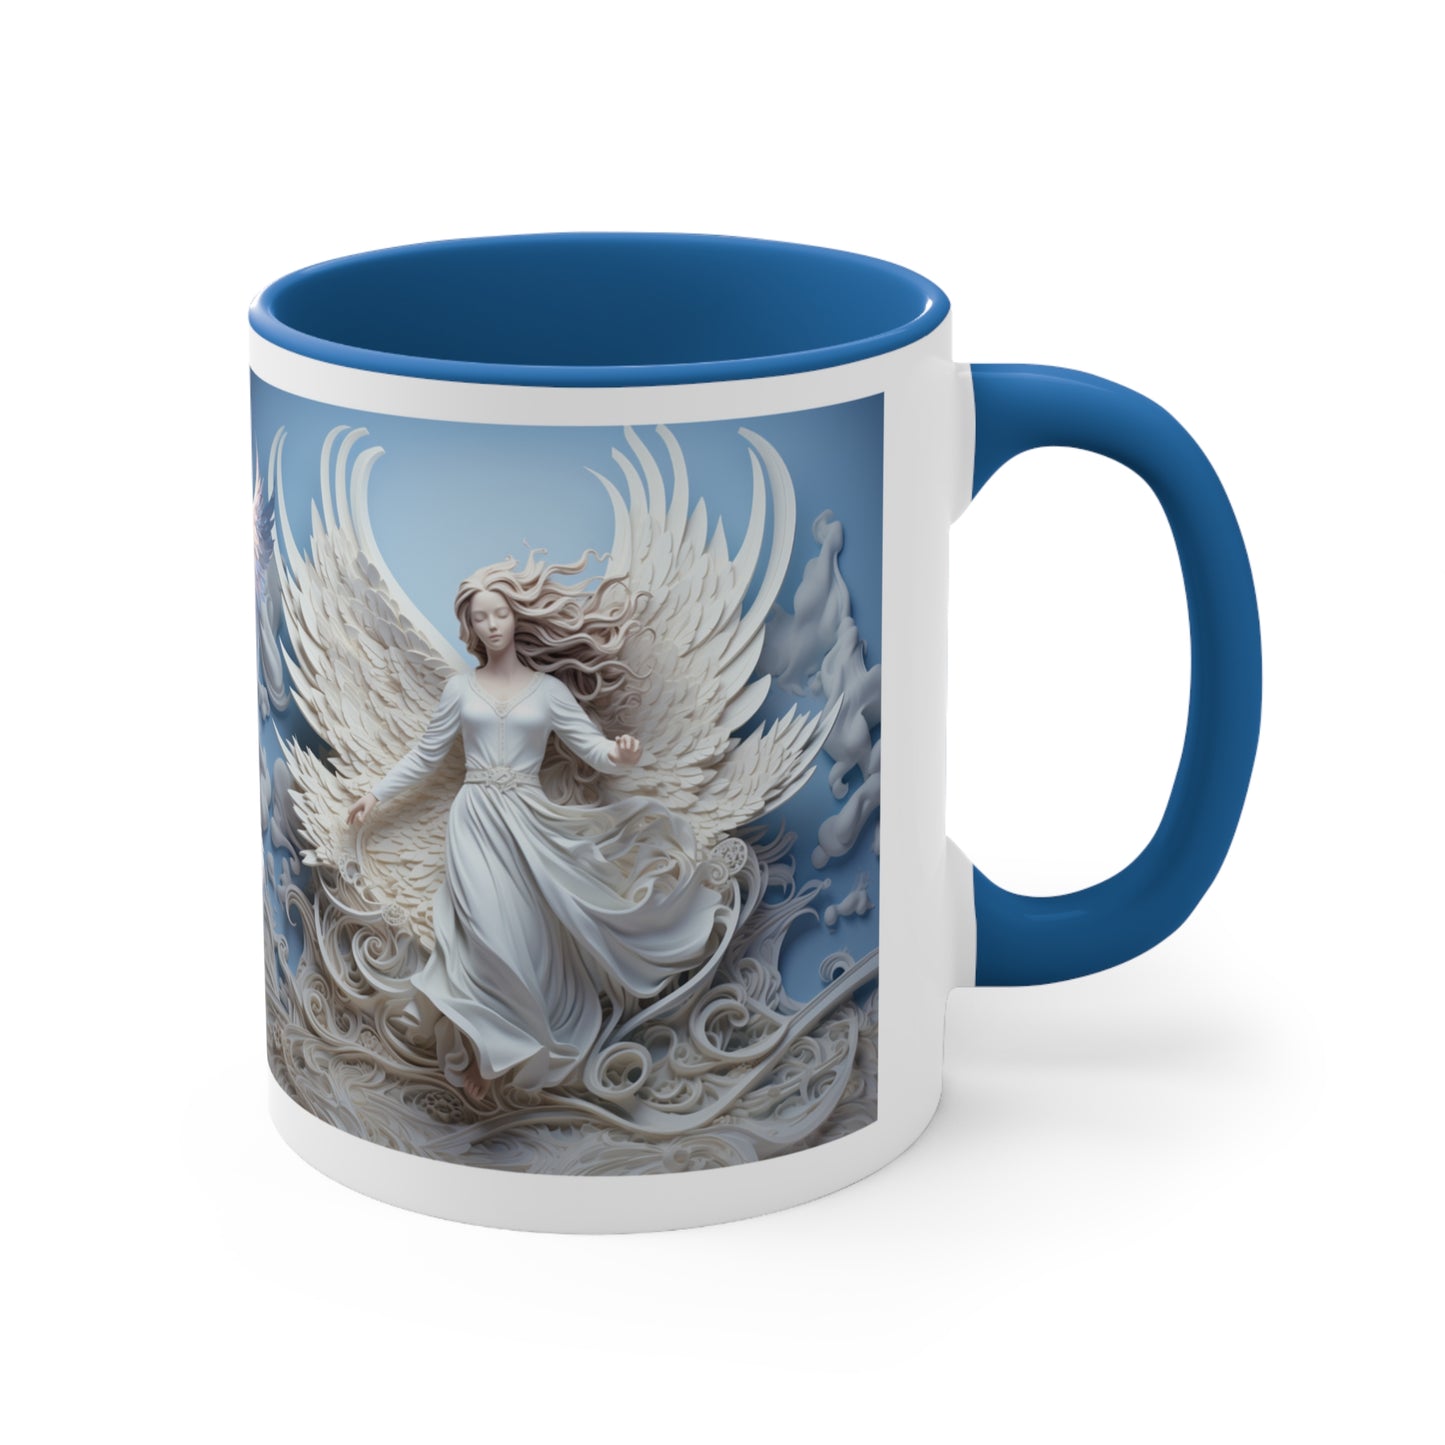 BEAUTIFUL ANGEL MUG - Angelical Mugs - Angels - Mugscity - Free Shipping